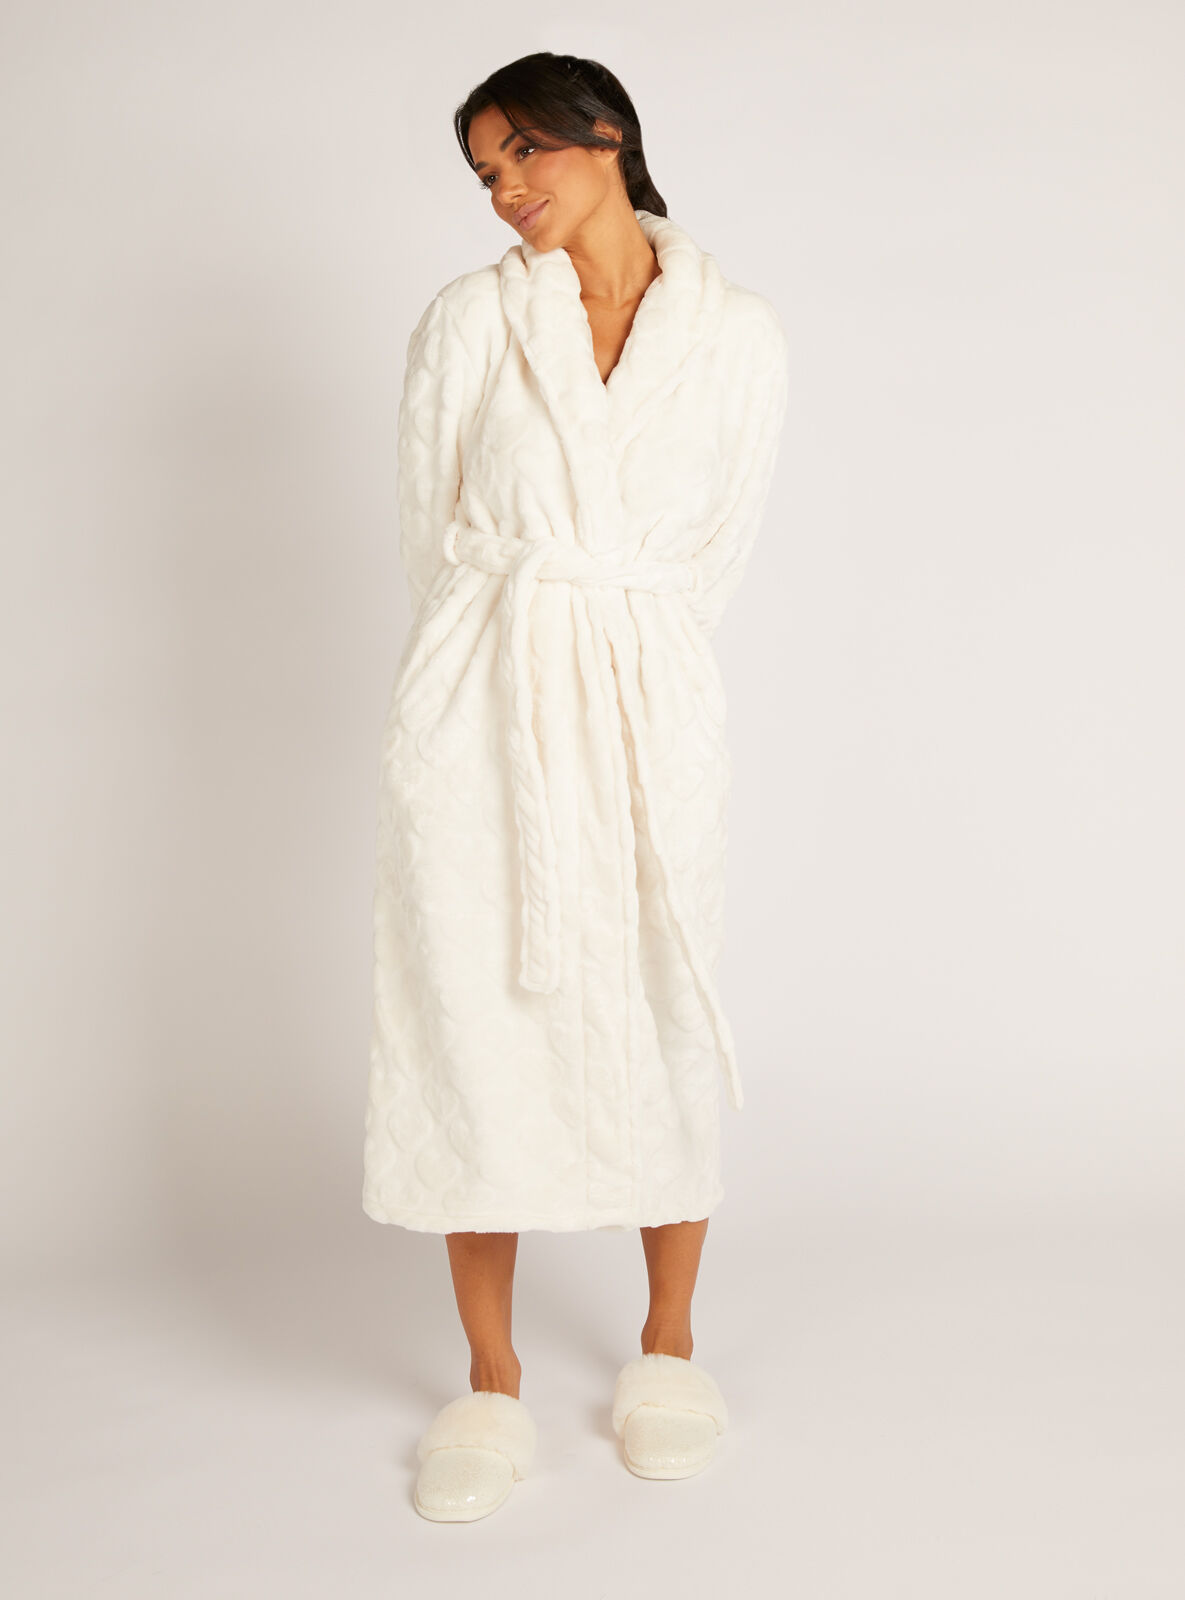 TowelSelections Women's Robe, Turkish Cotton Short Terry Bathrobe Medium  White - Walmart.com